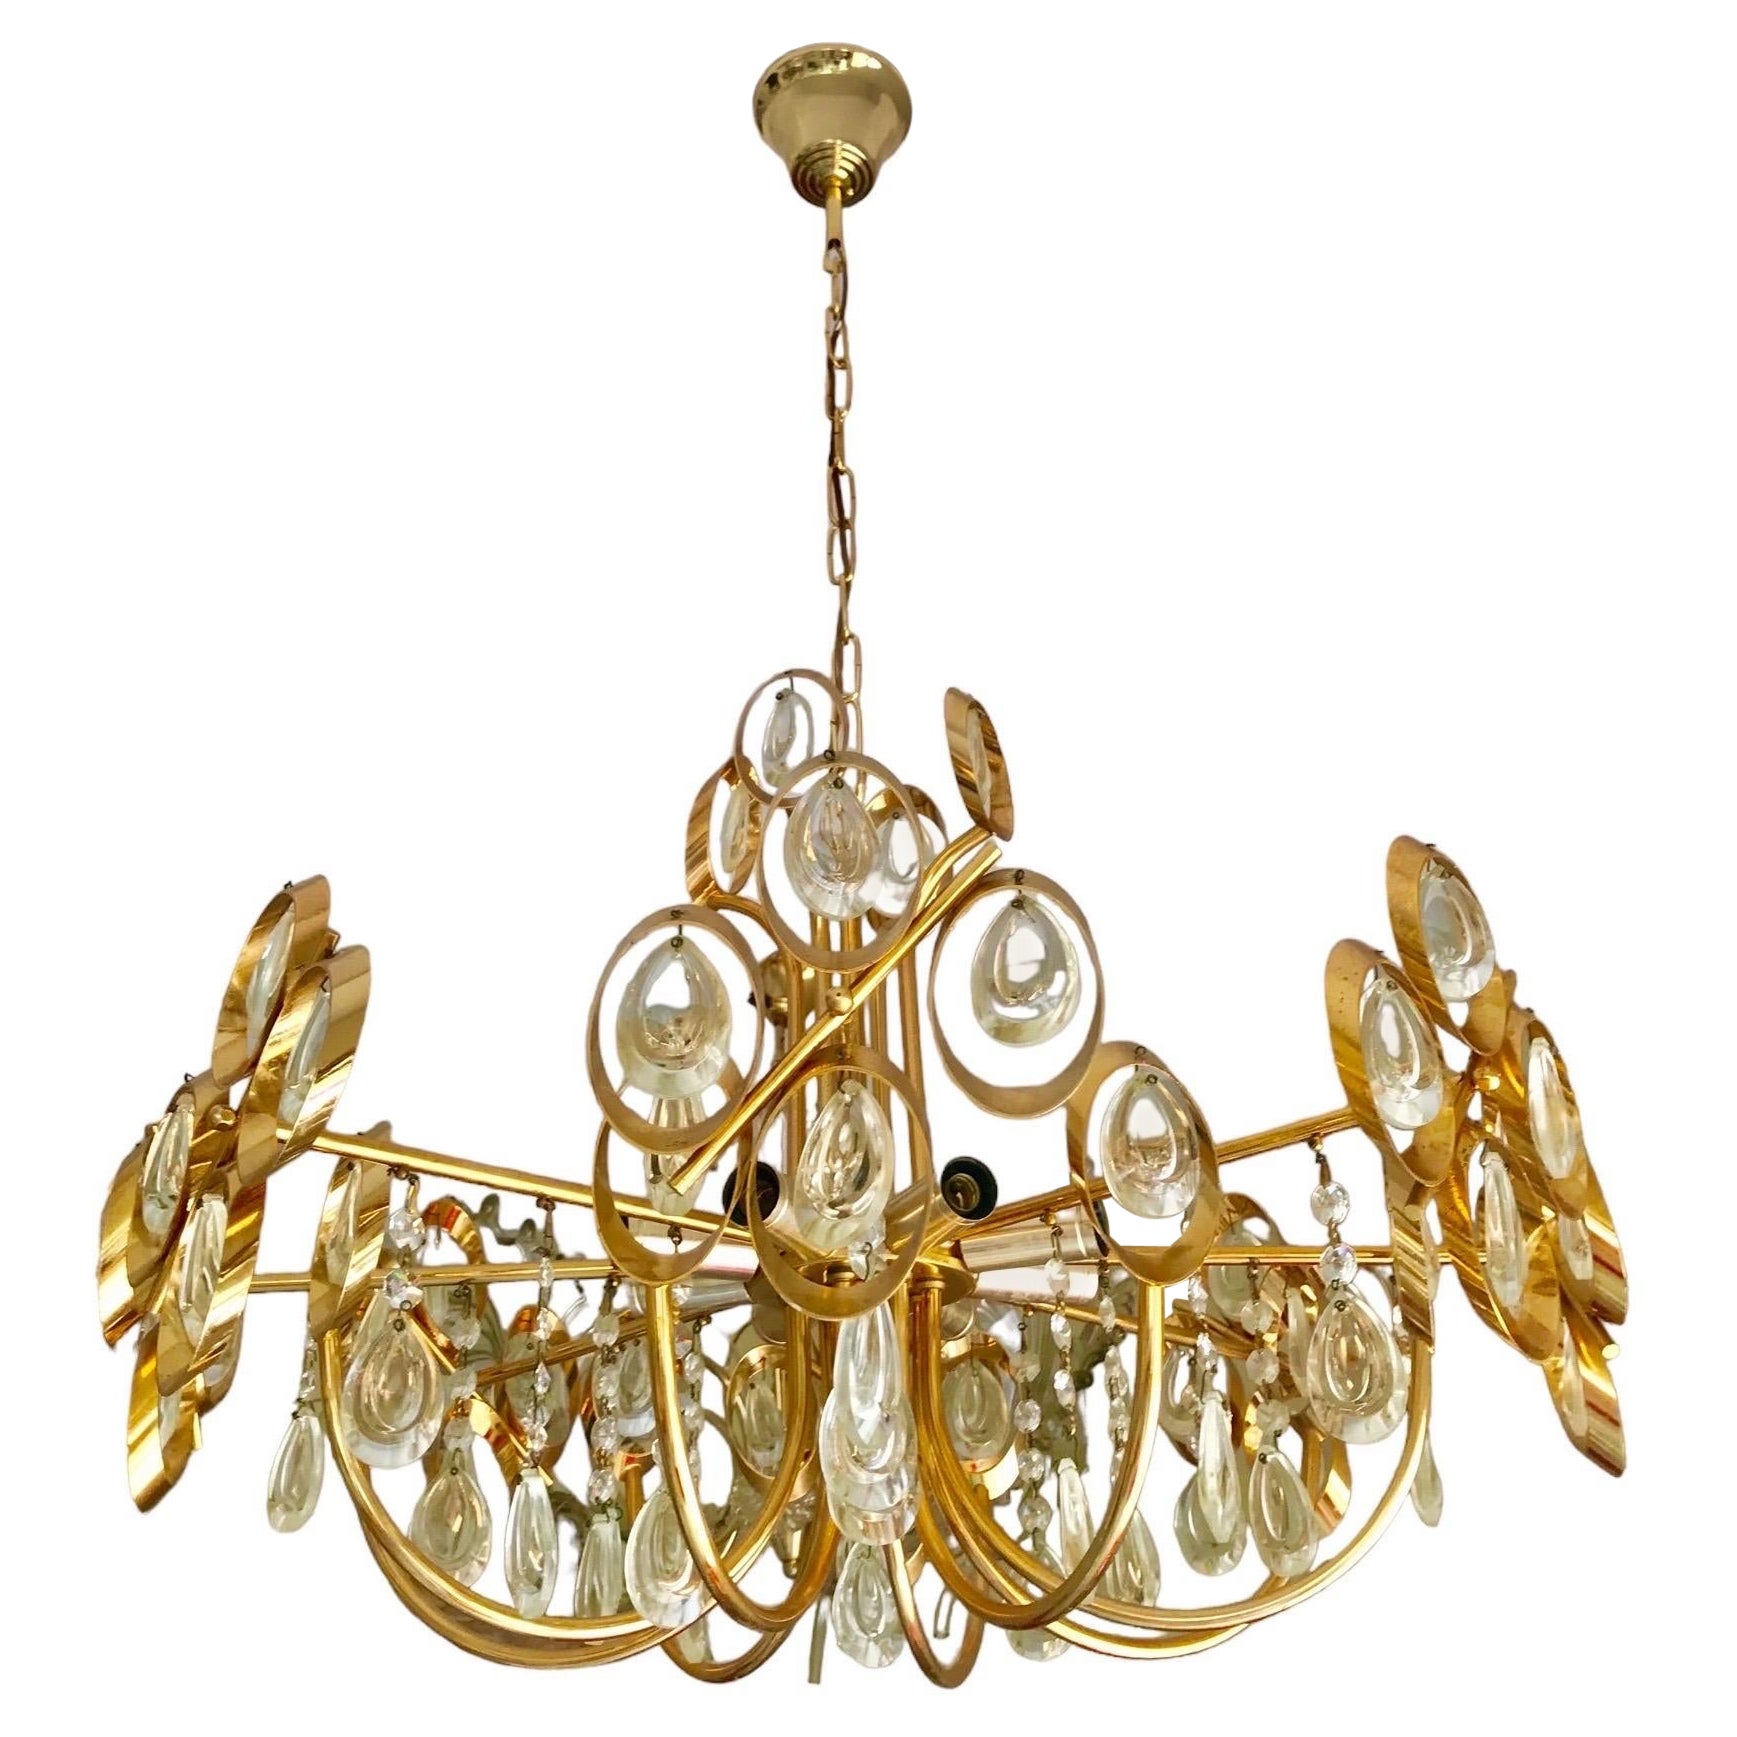 Gaetano Sciolari chandelier gilt gold structure period 1970s For Sale